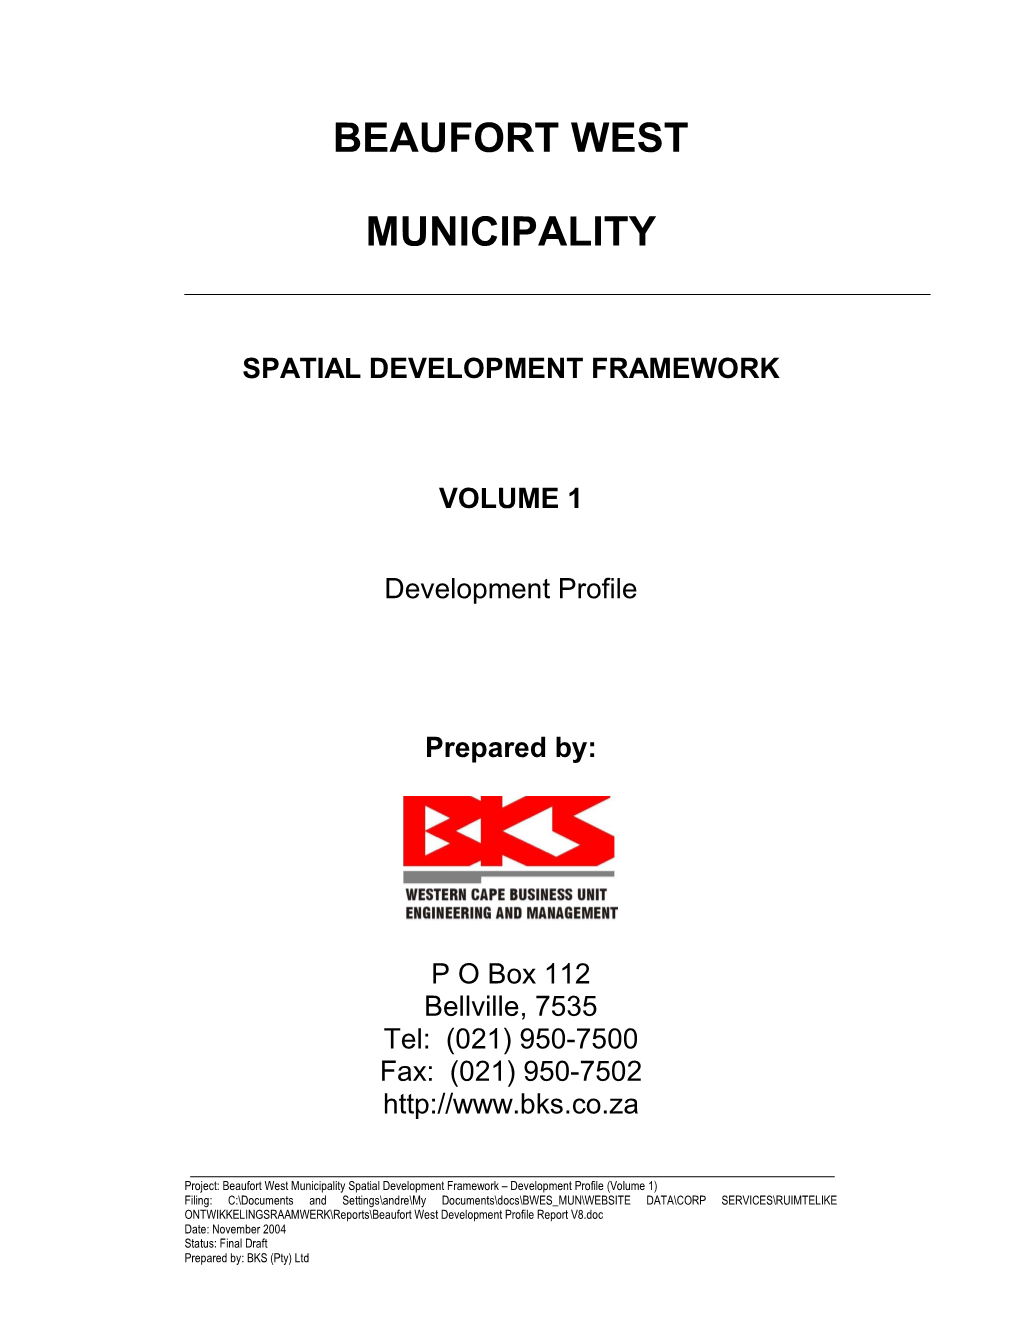 Beaufort West Development Profile Report V8.Doc Date: November 2004 Status: Final Draft Prepared By: BKS (Pty) Ltd Page I